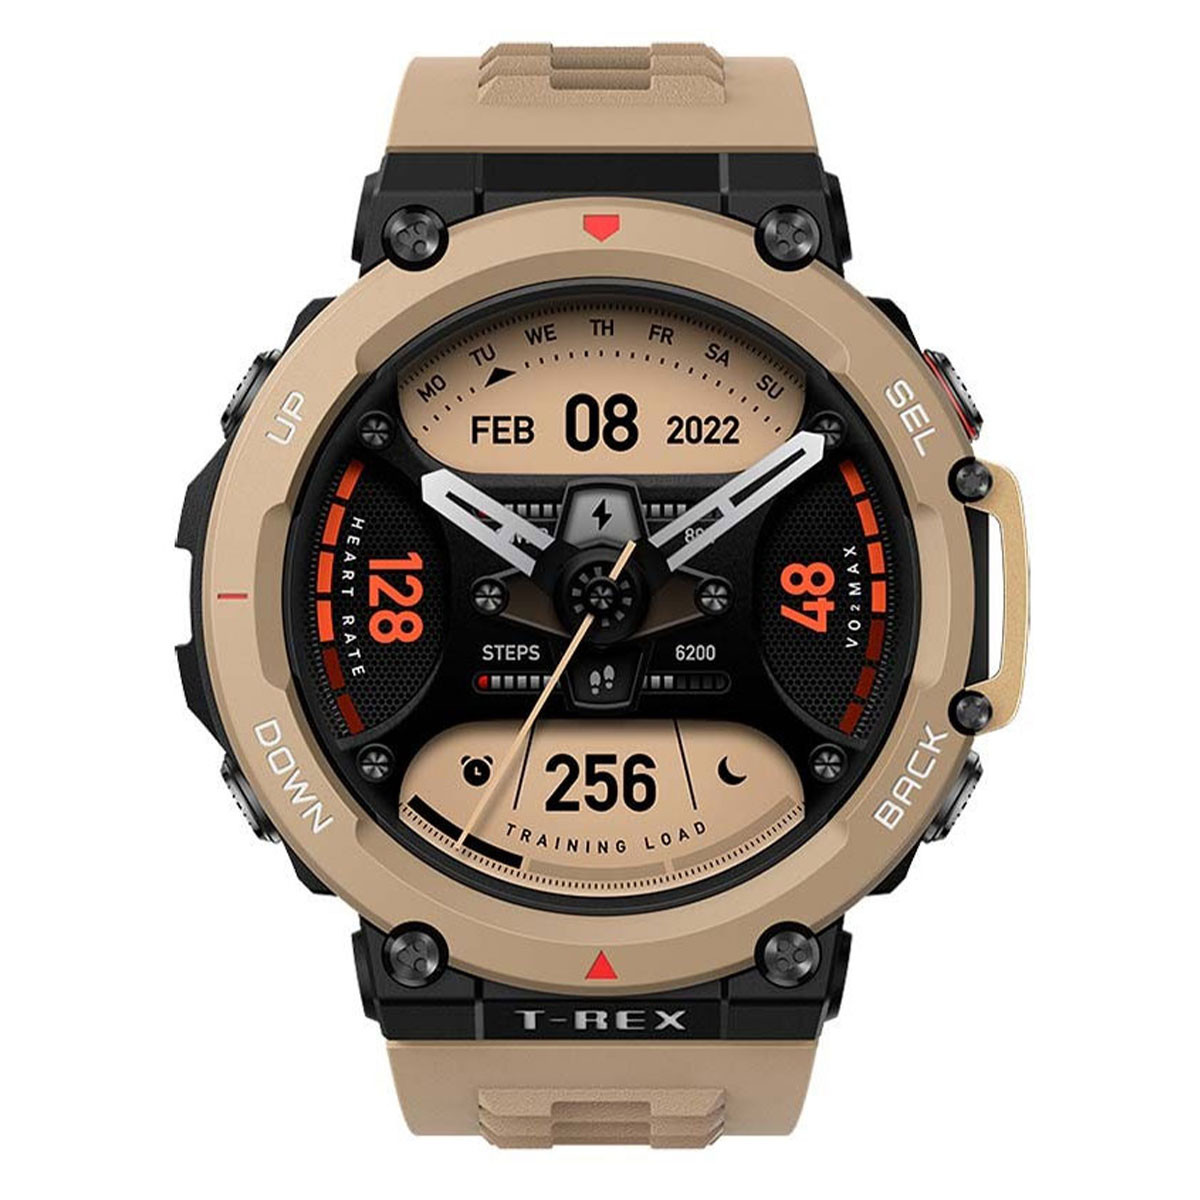 AMAZFIT smart watch t-rex 2 a2170 desert khaki Click Guatemala www.